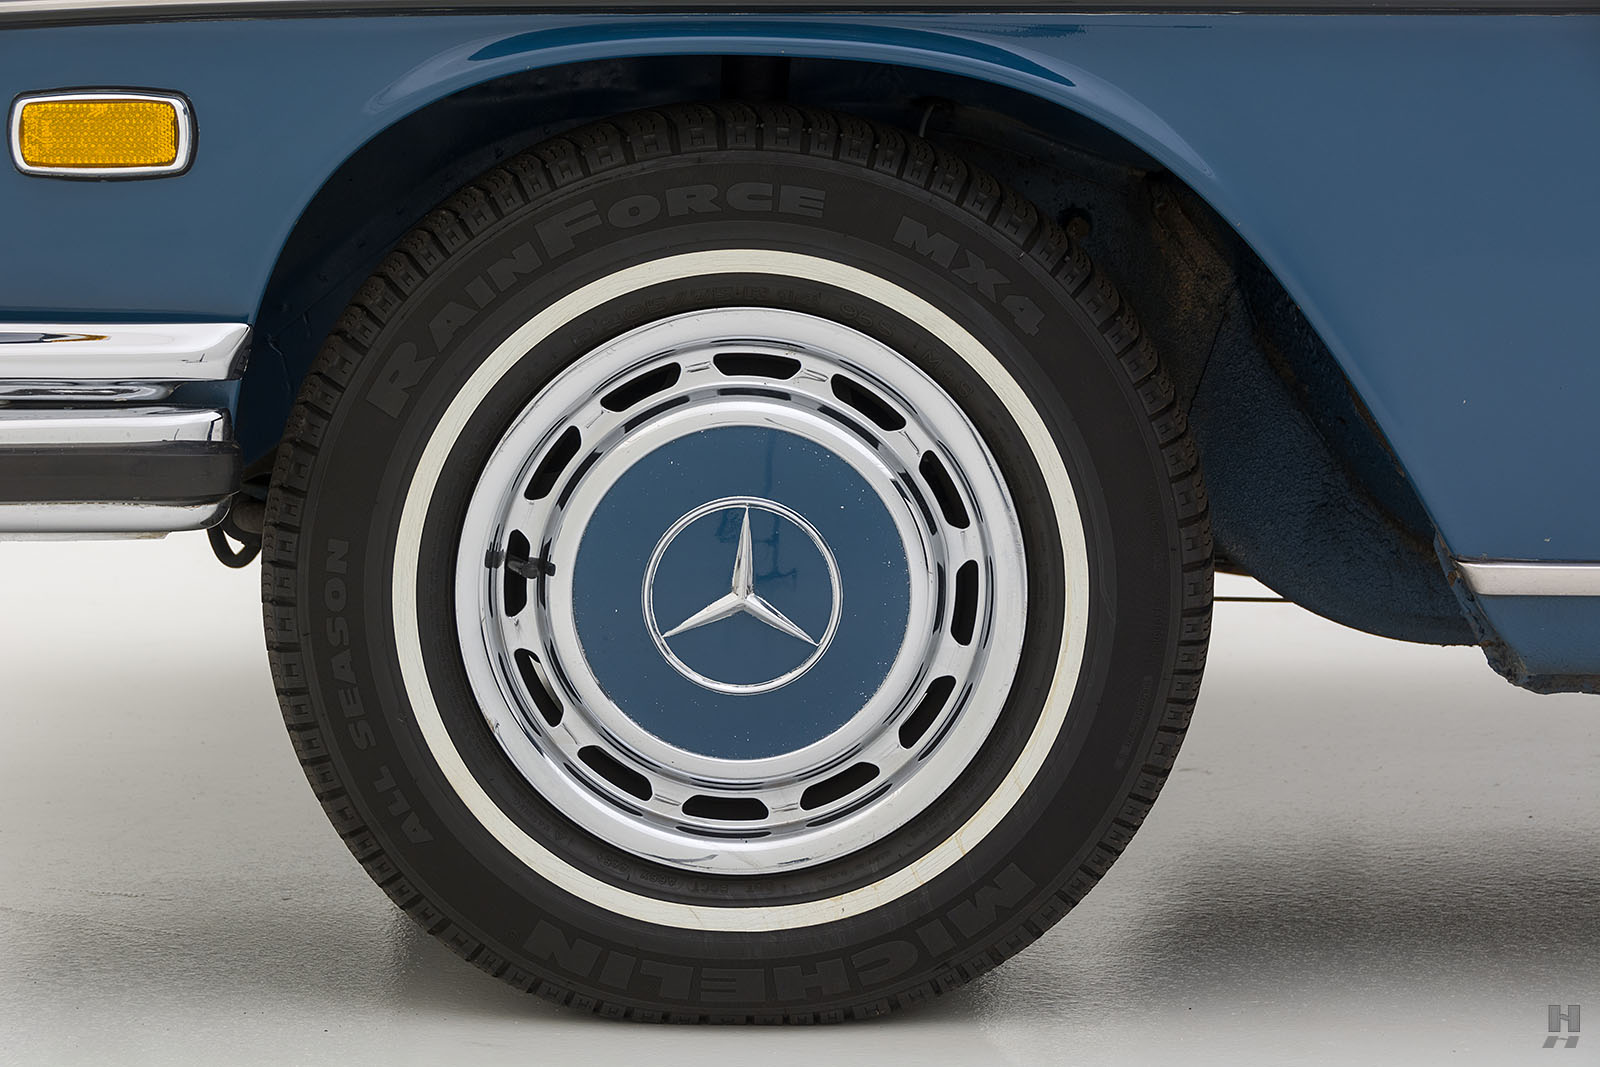 1960 Mercedes-Benz 220B